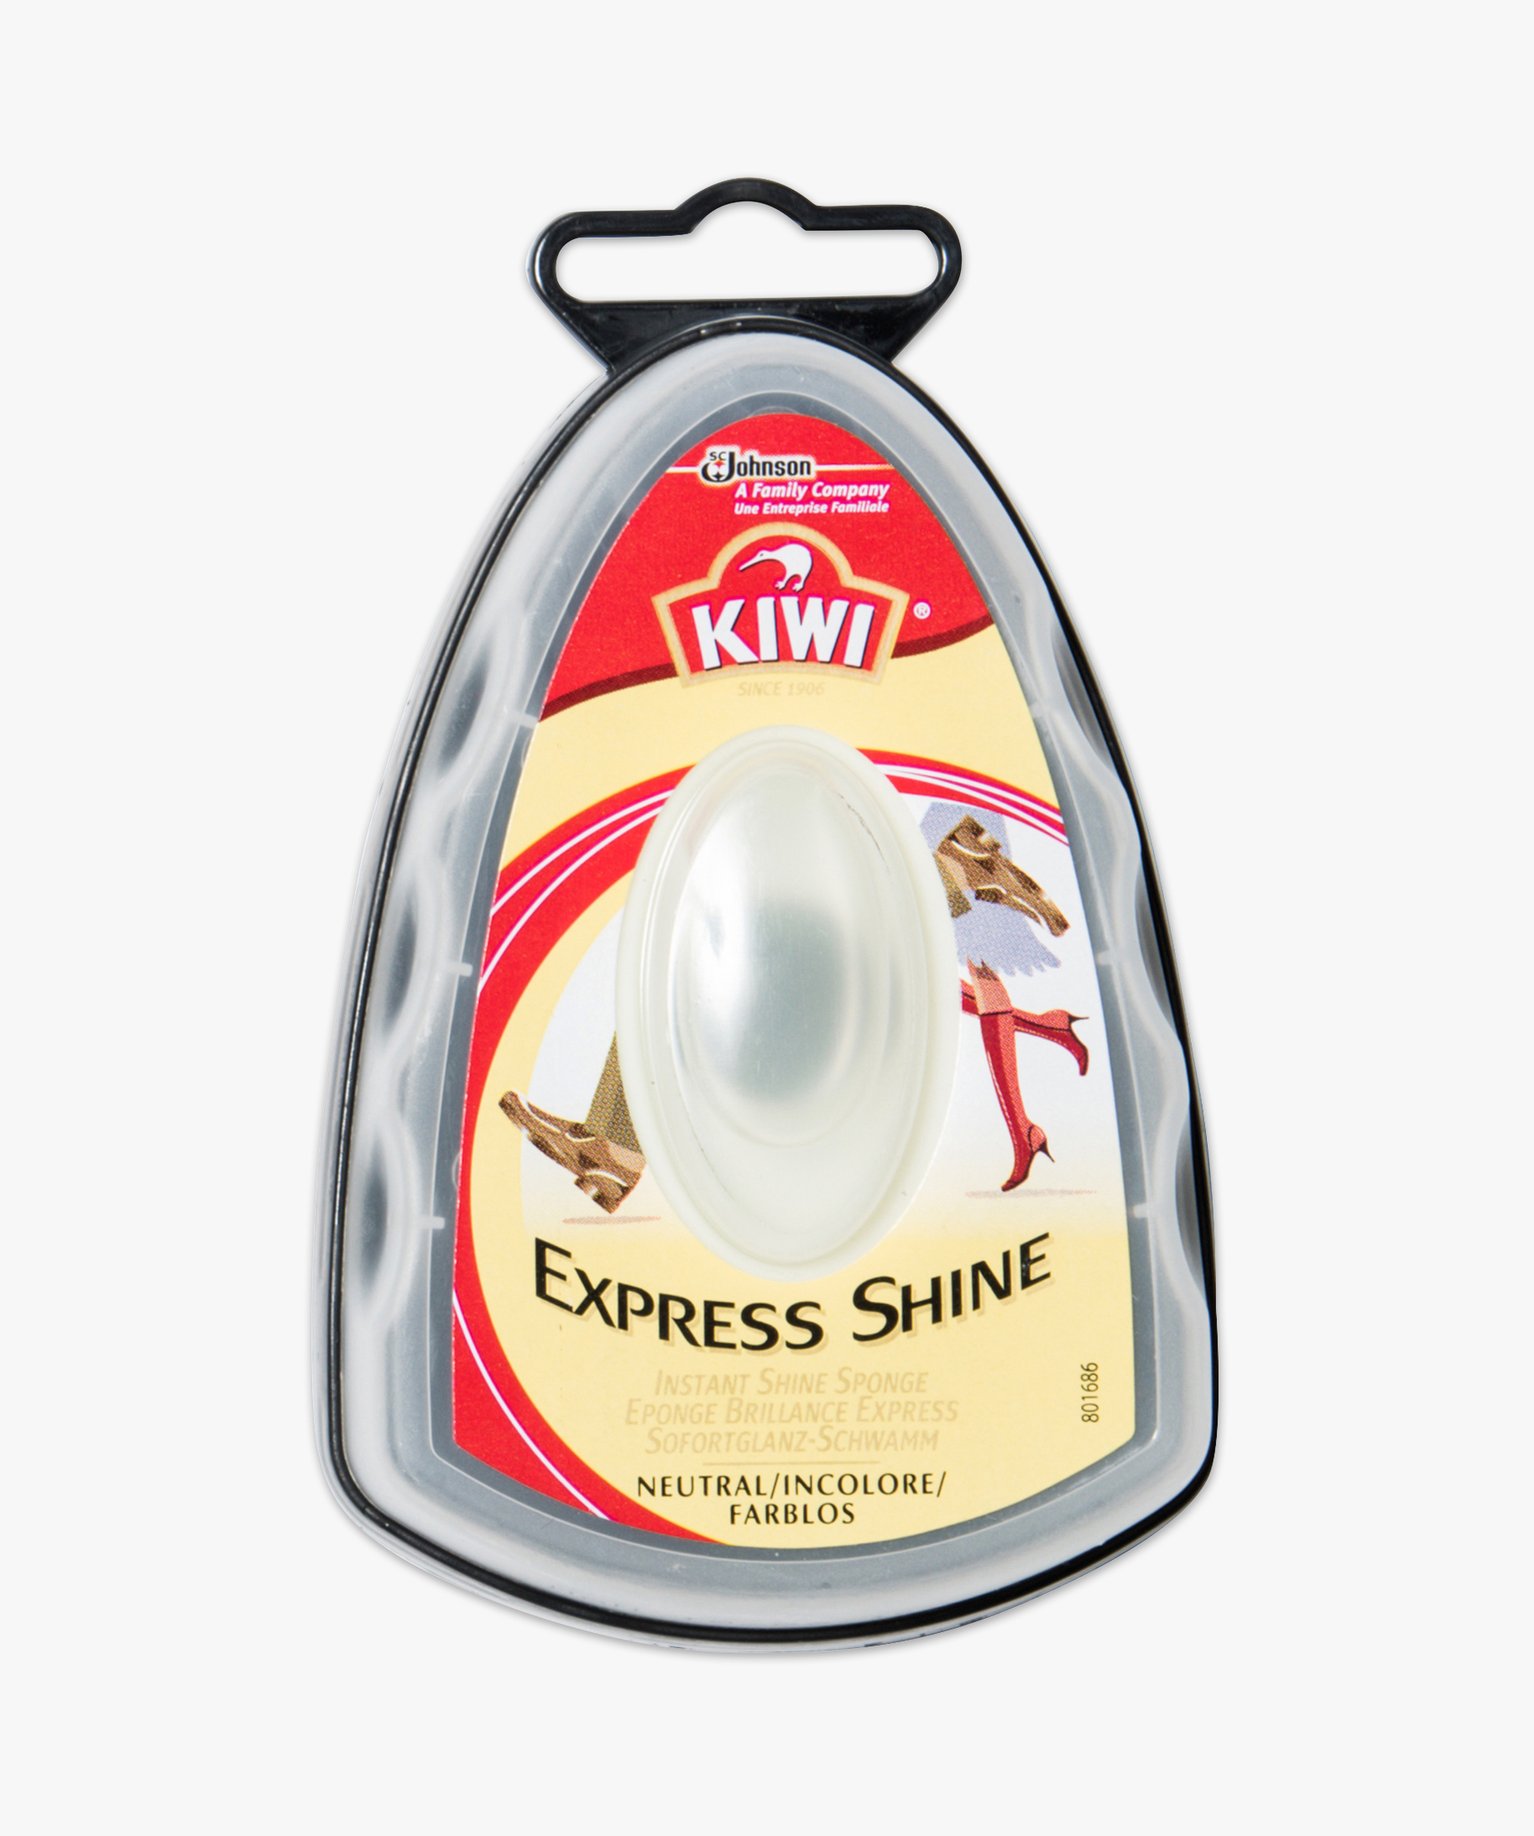 eponge brillance express  express shine  de kiwi incolore blanc